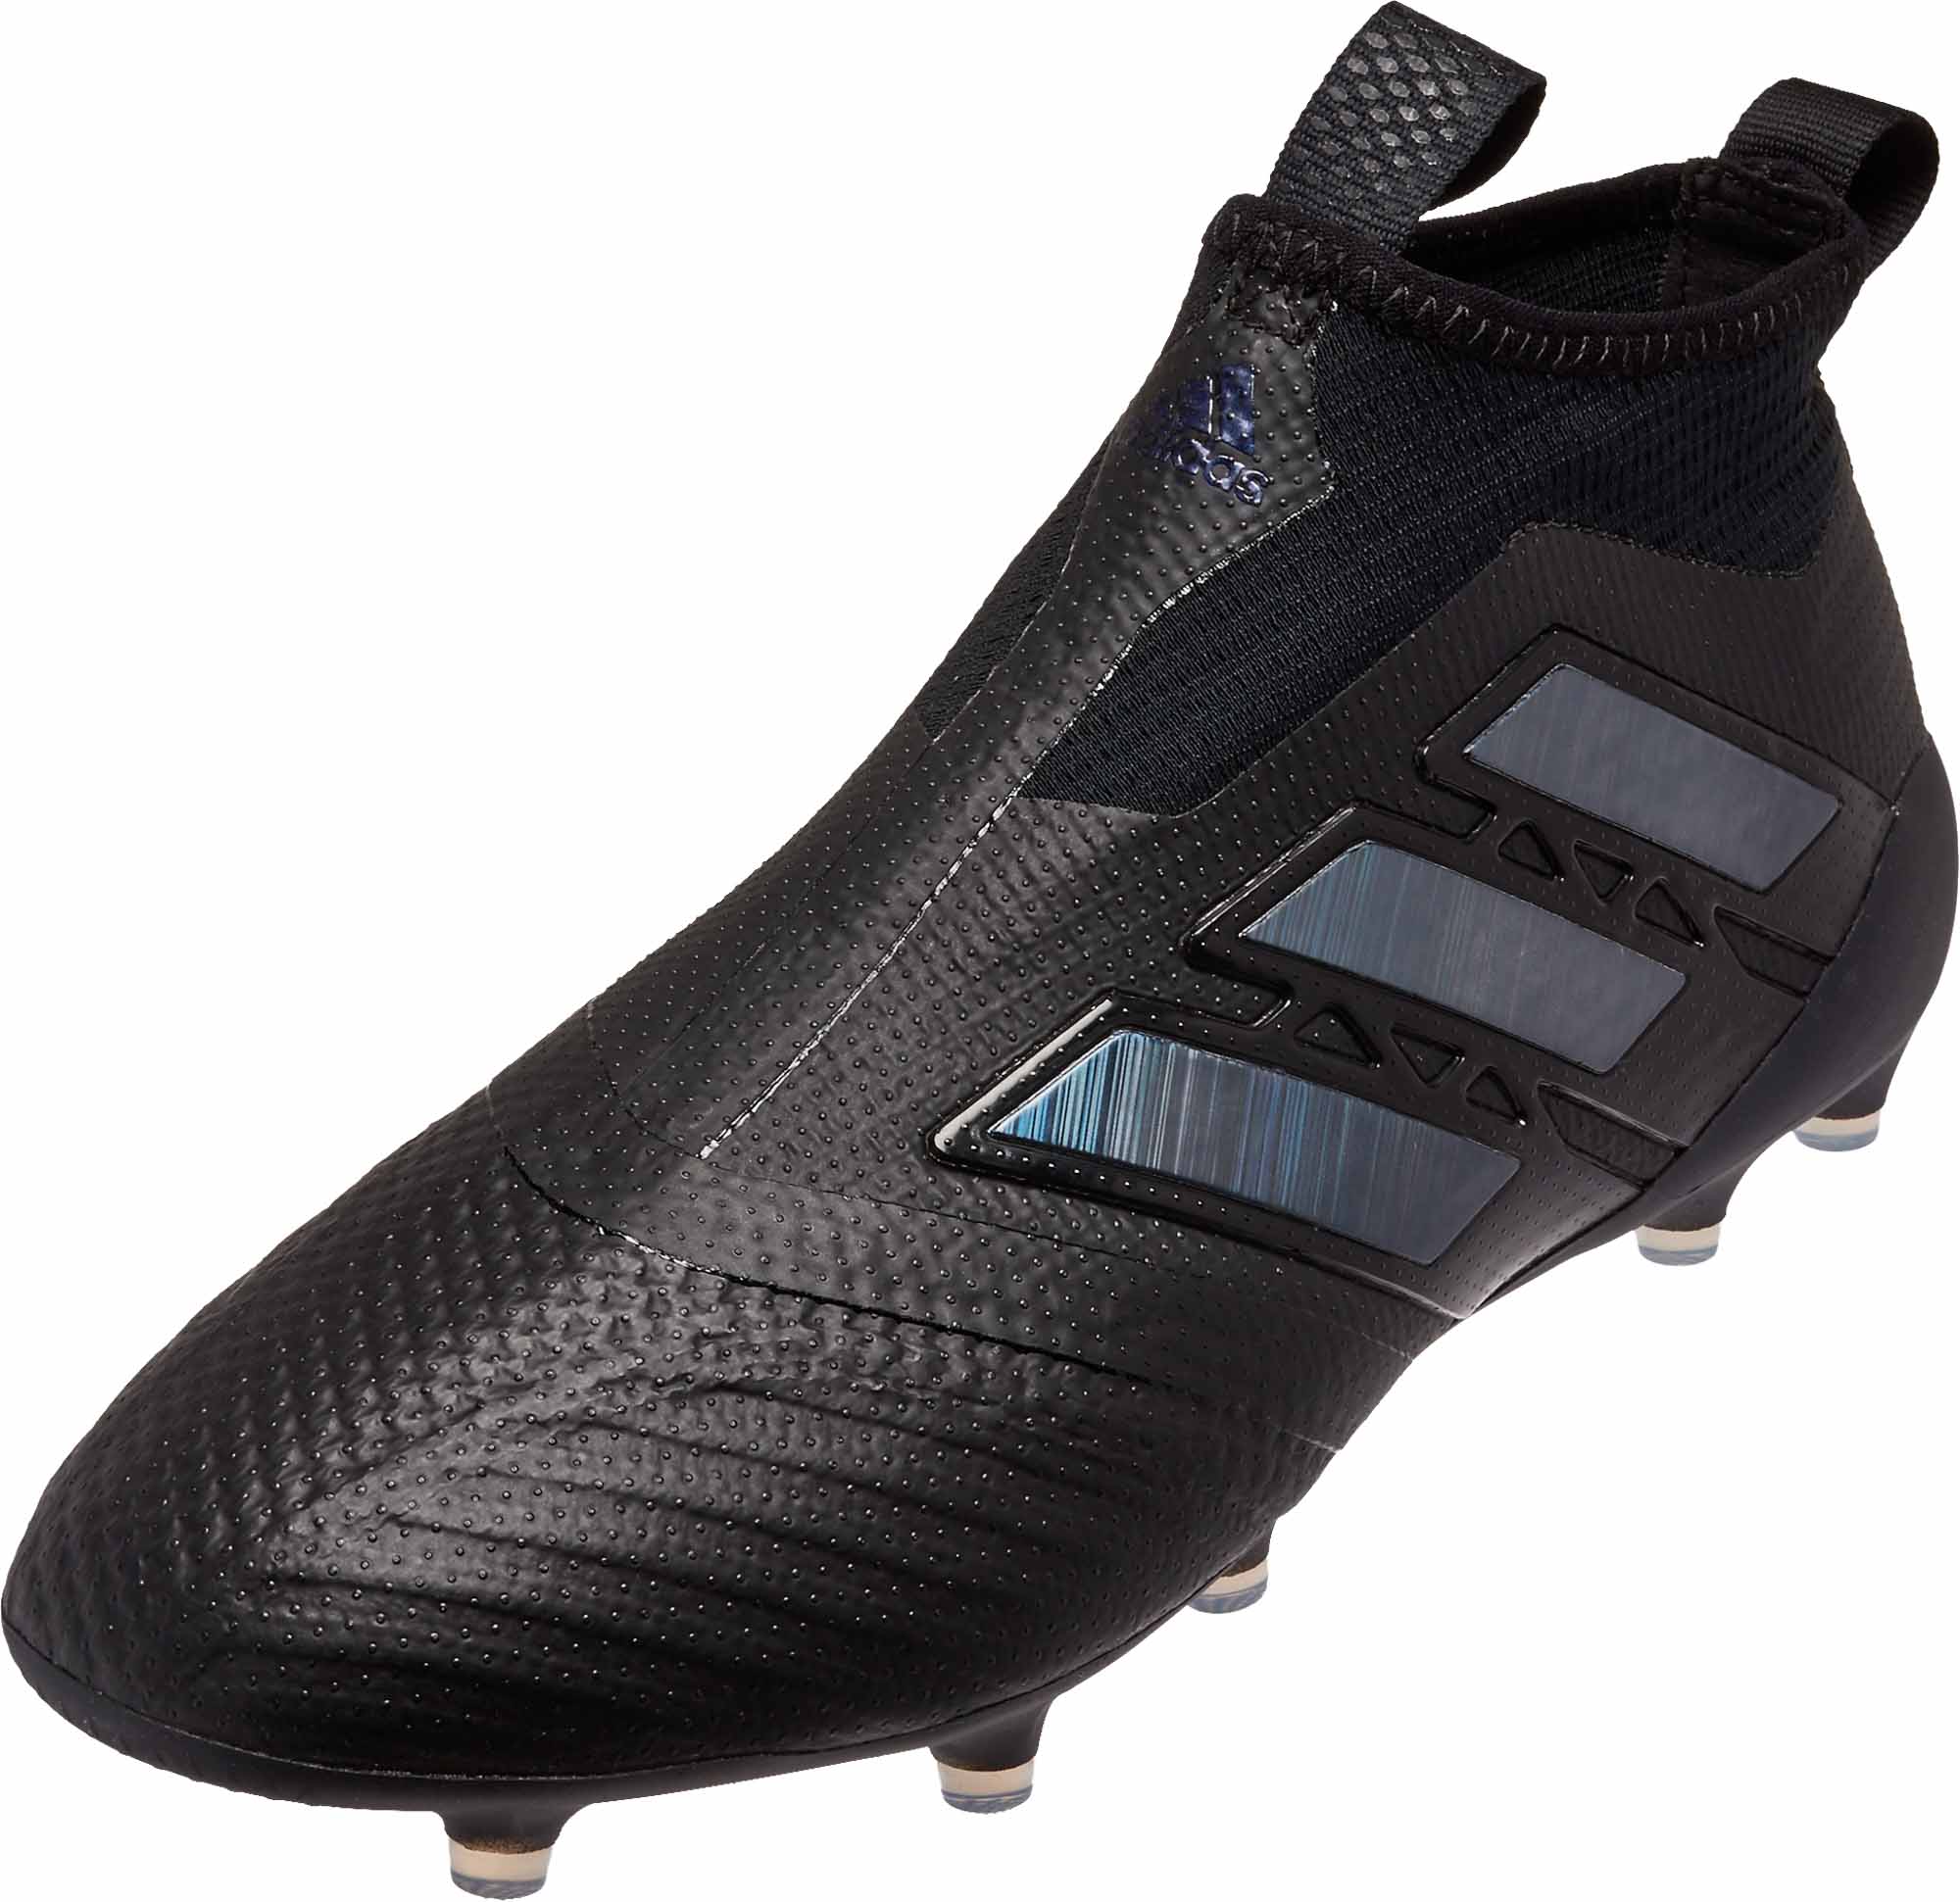 adidas ACE 17 Purecontrol FG - Black Soccer Cleats